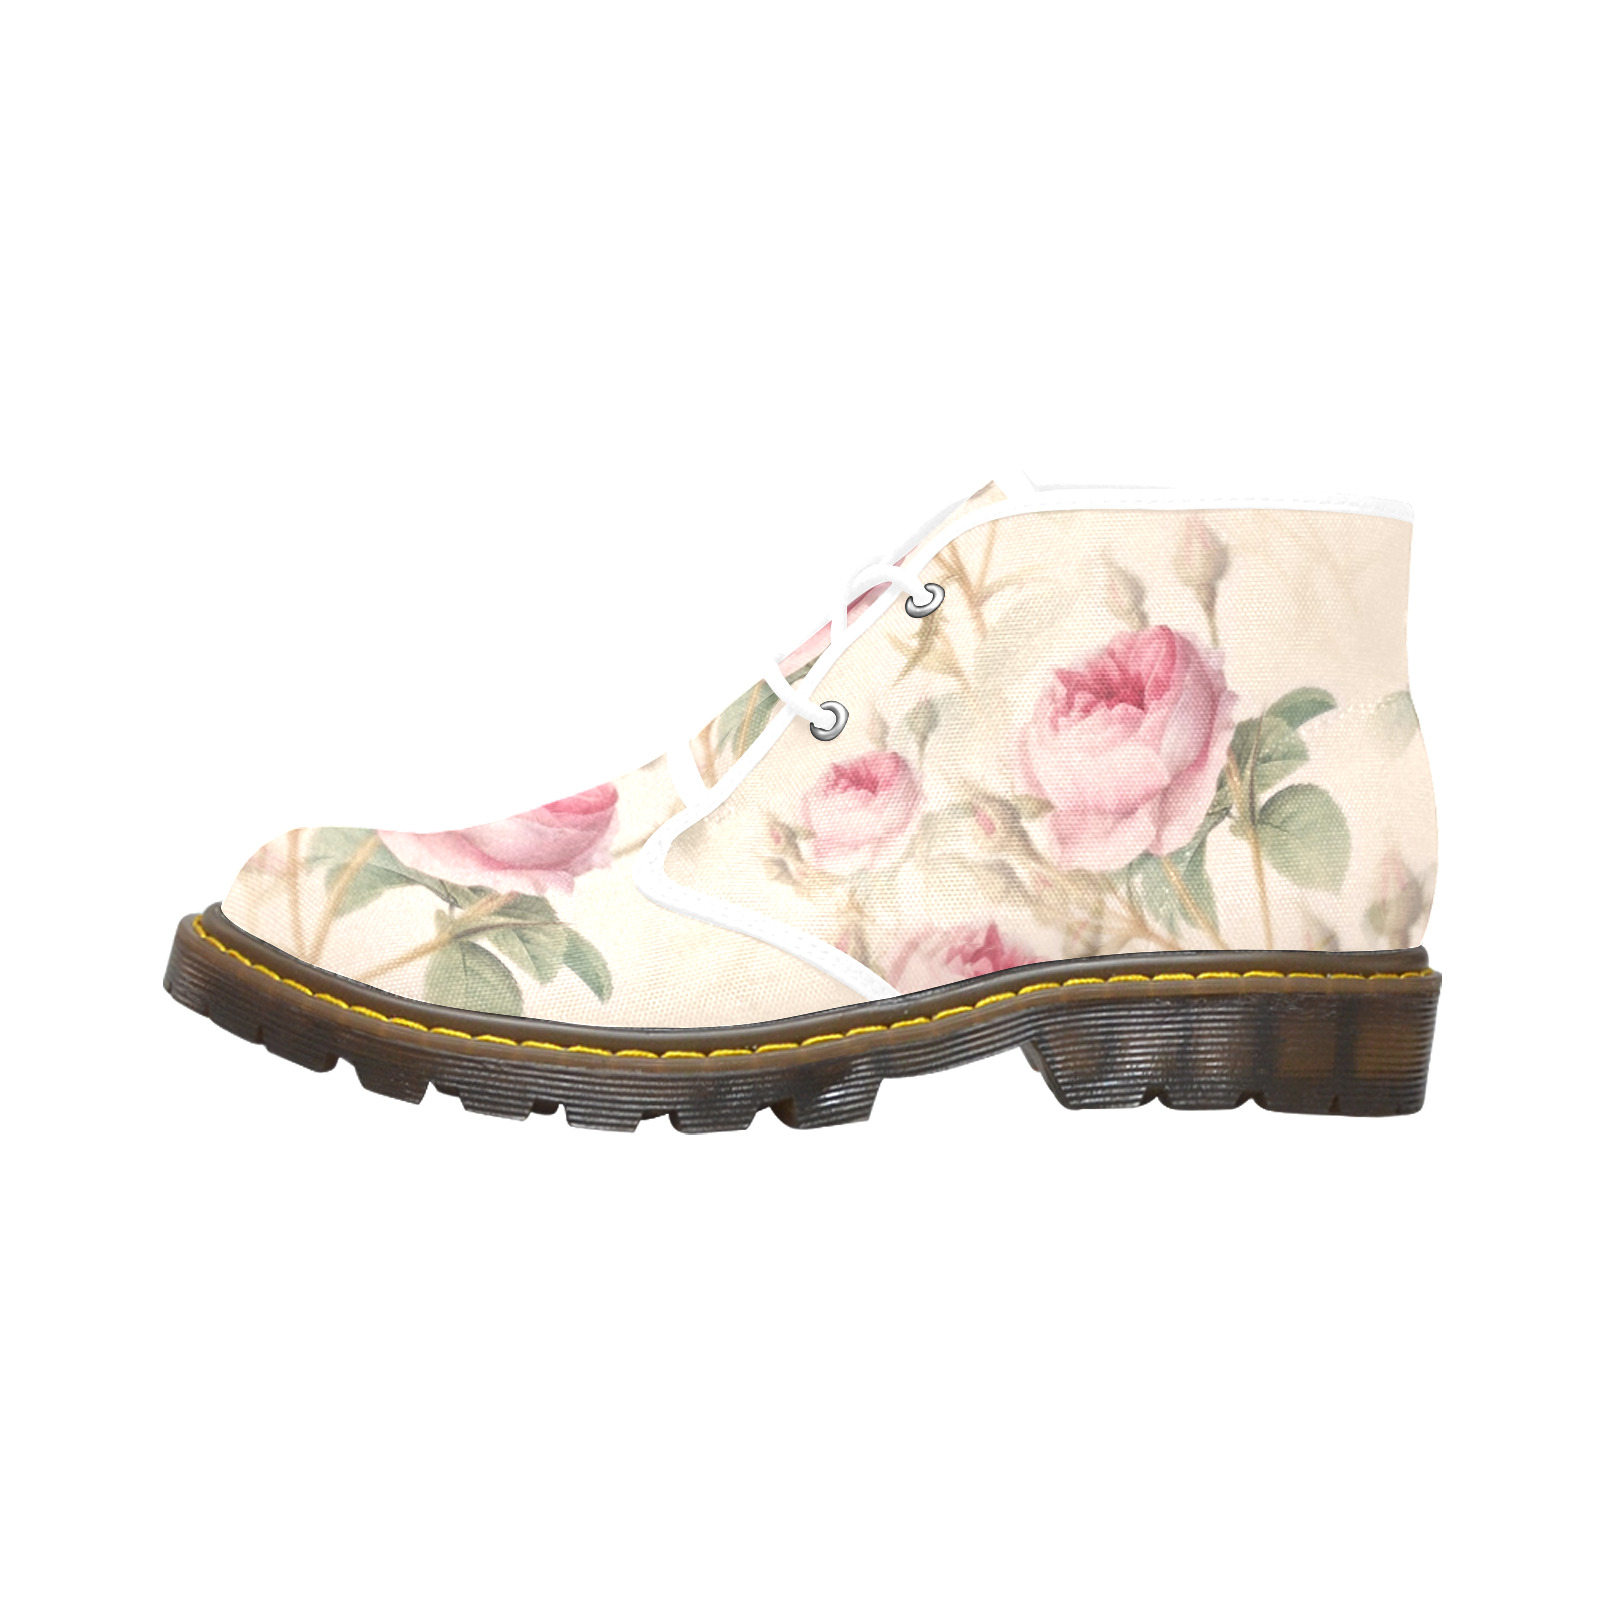 Vintage Pink Rose Garden Pattern Women's Canvas Chukka Boots (Model 2402-1)